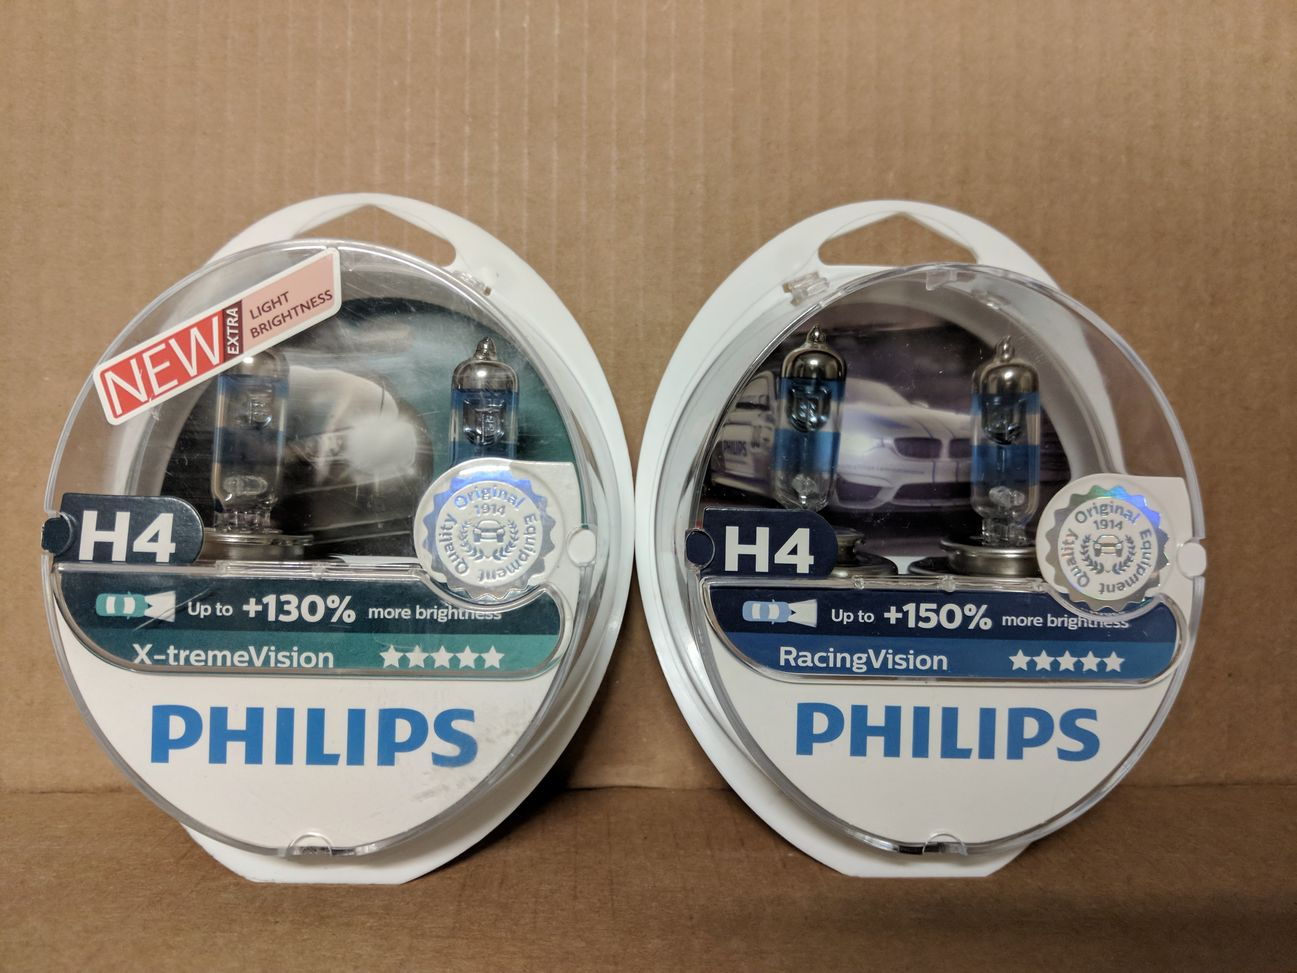 Philips RacingVision vs Philips X-treme Vision +130 Car Headlight